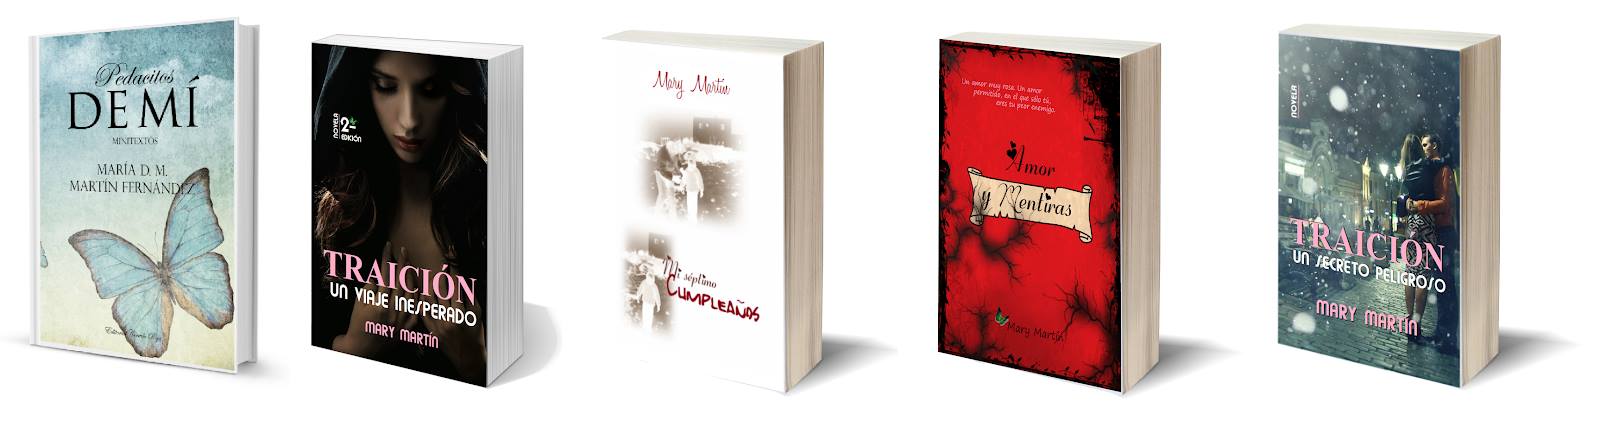 Portadas de historias de Mary Martín Escritora de Novela Romántica.